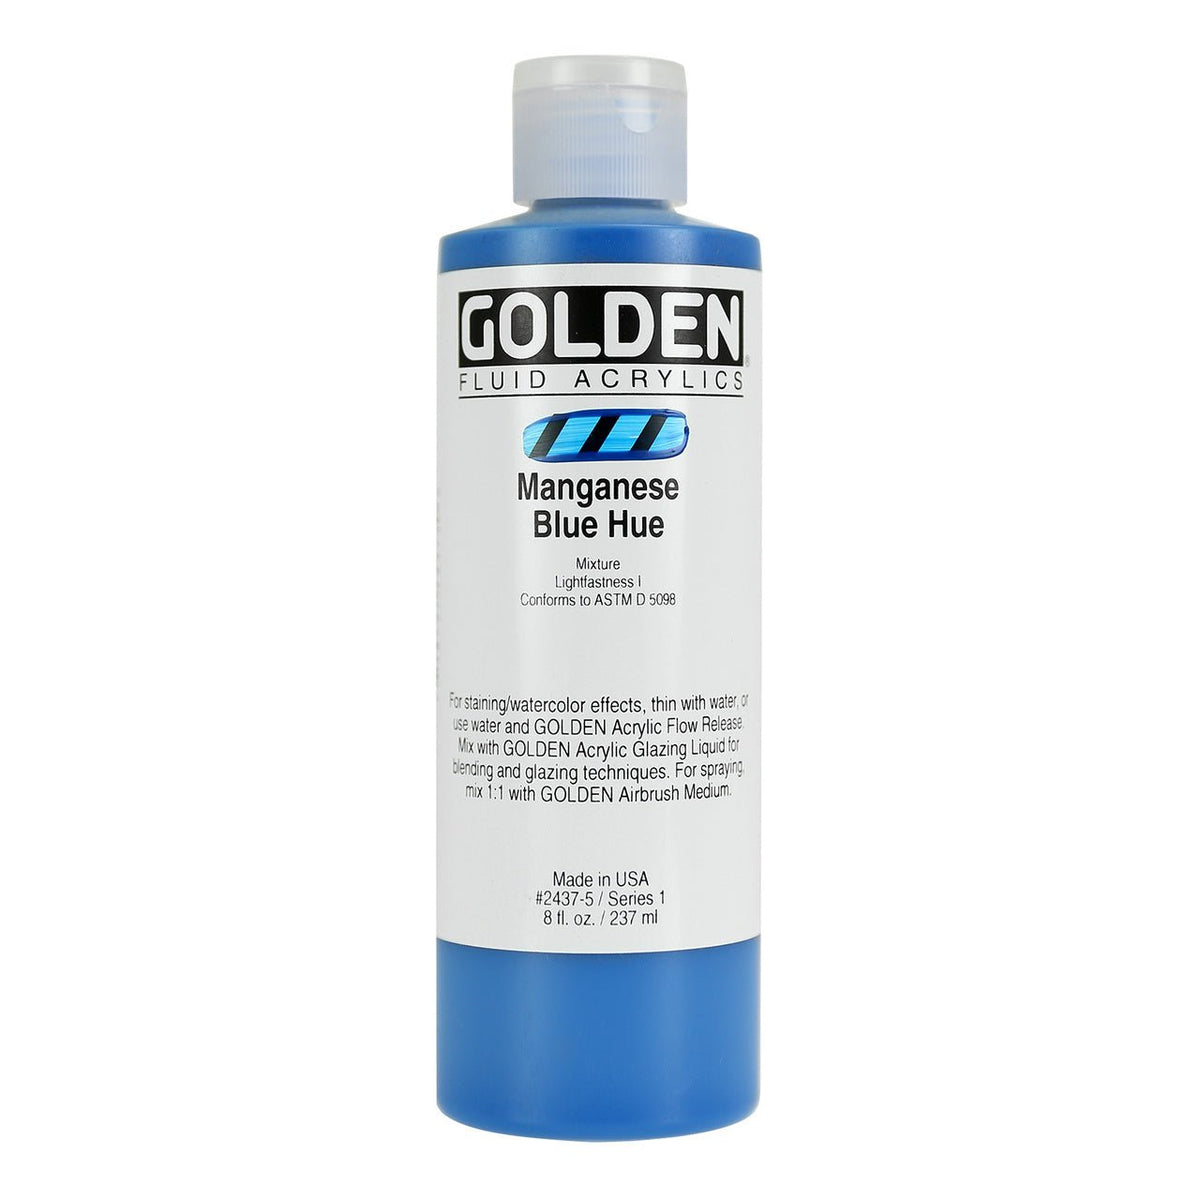 Golden Fluid Acrylic Manganese Blue Hue 8 oz - merriartist.com